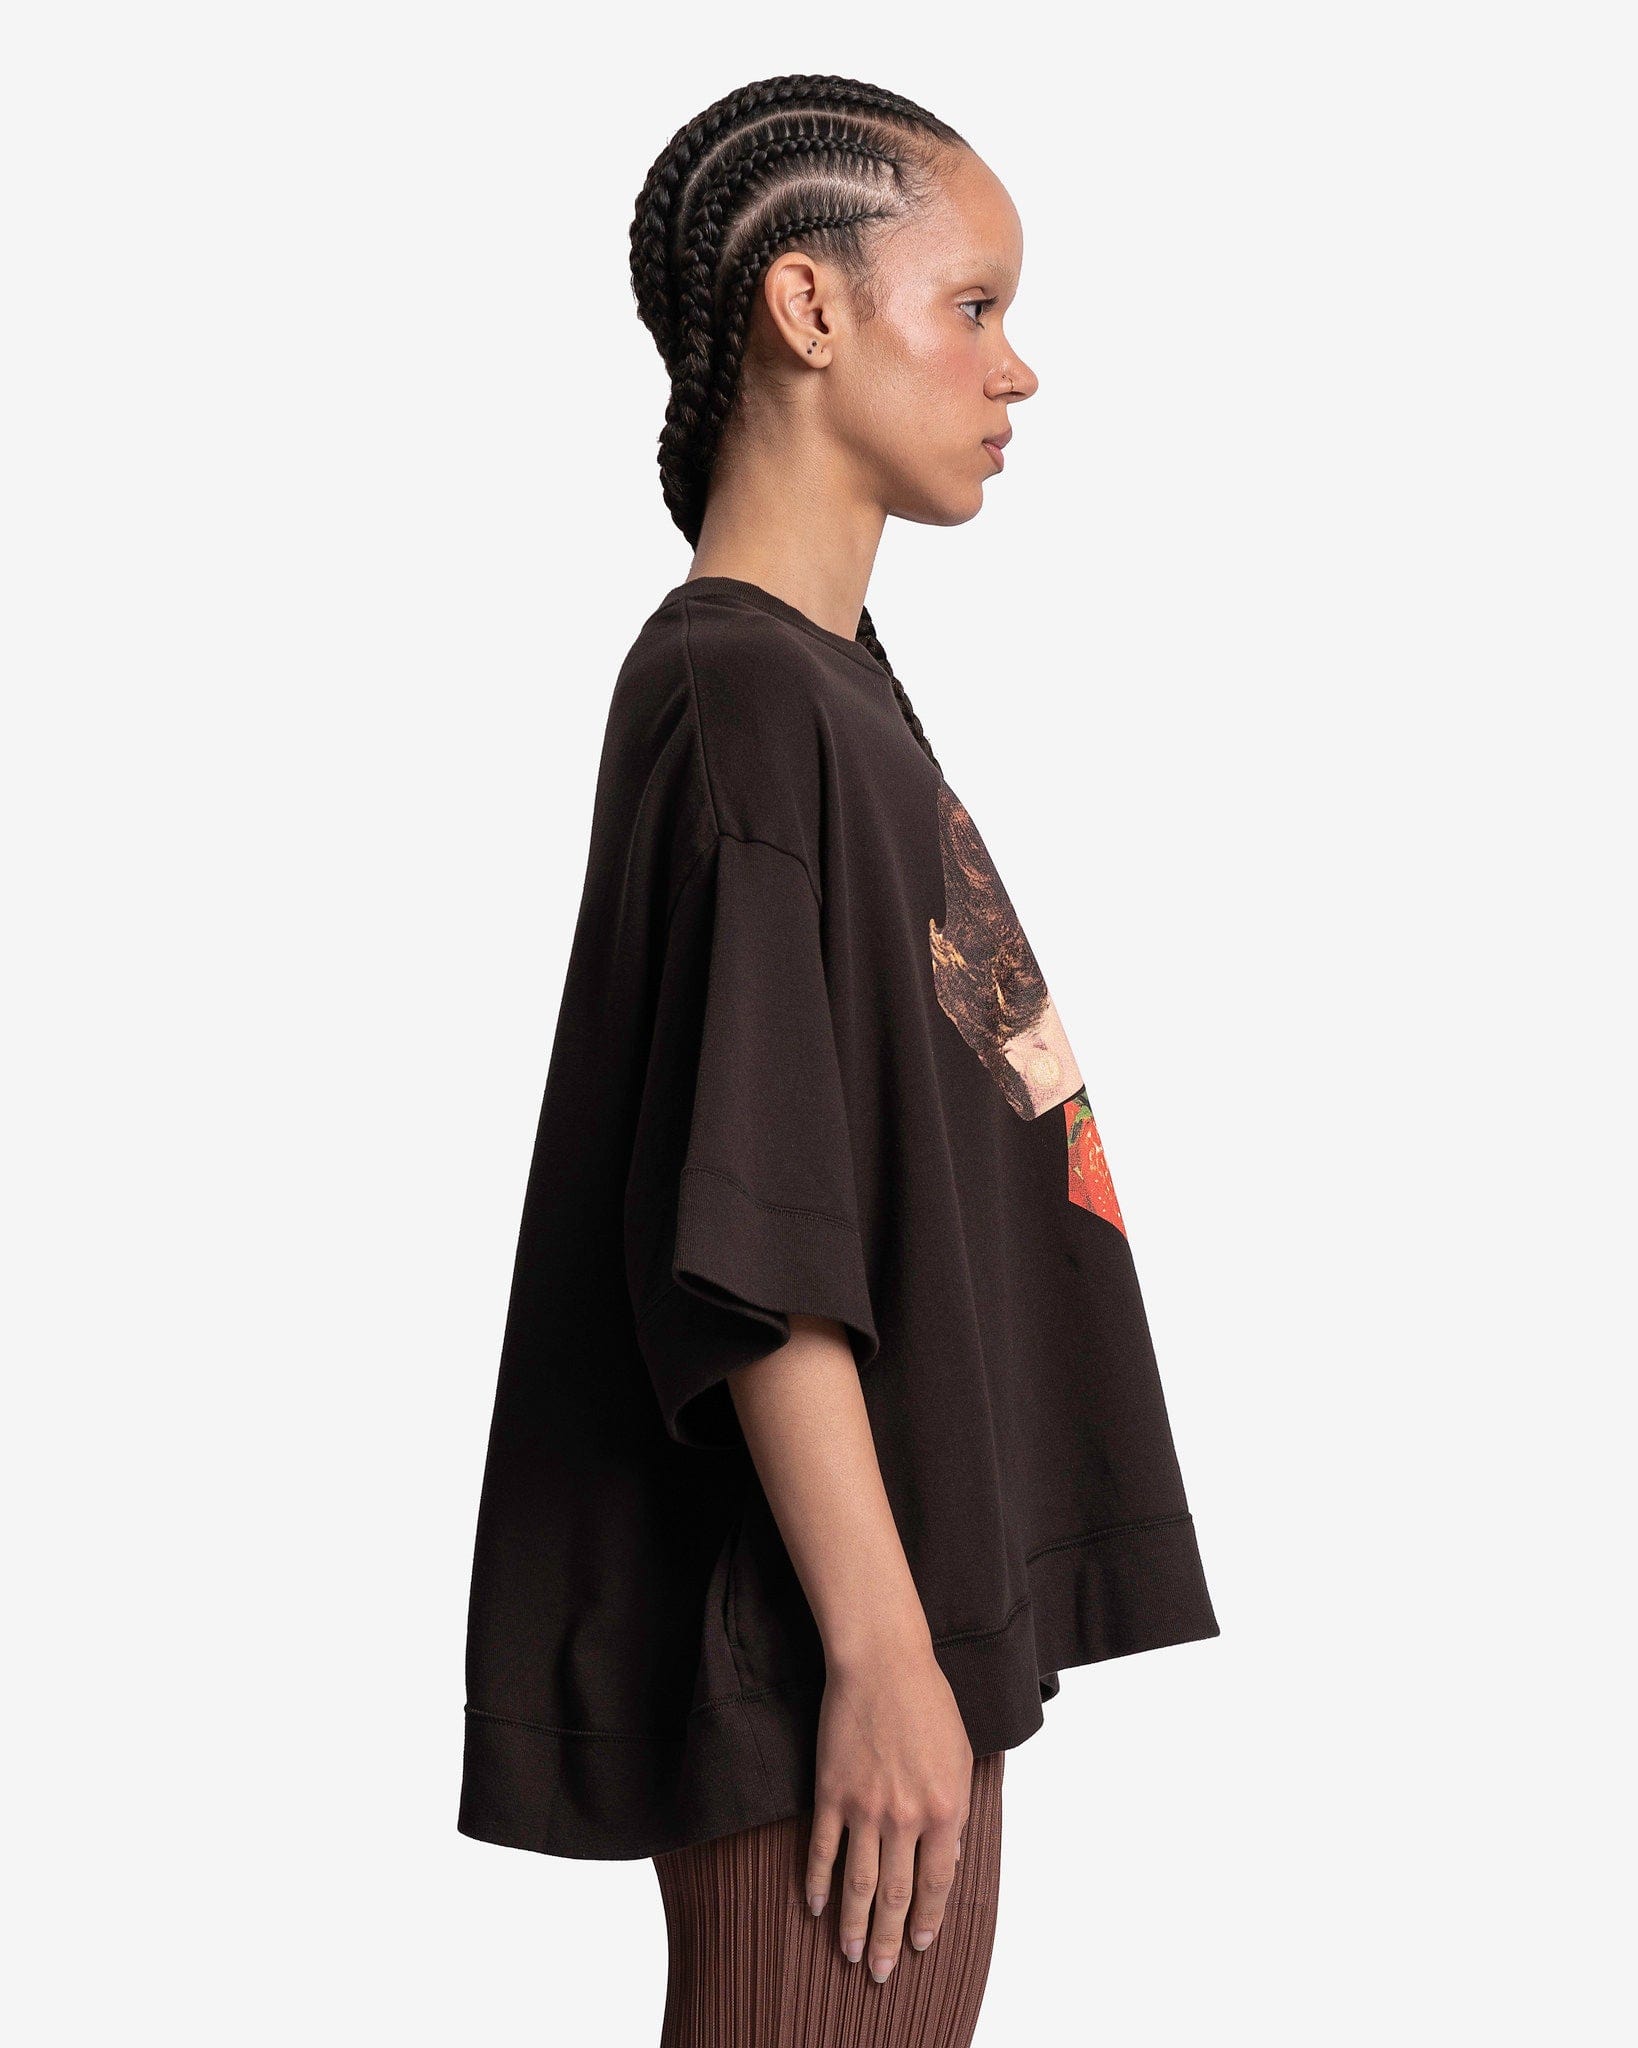 Undercover Women T-Shirts Women's Oversized Graphic Print T-Shirt in Dark Brown